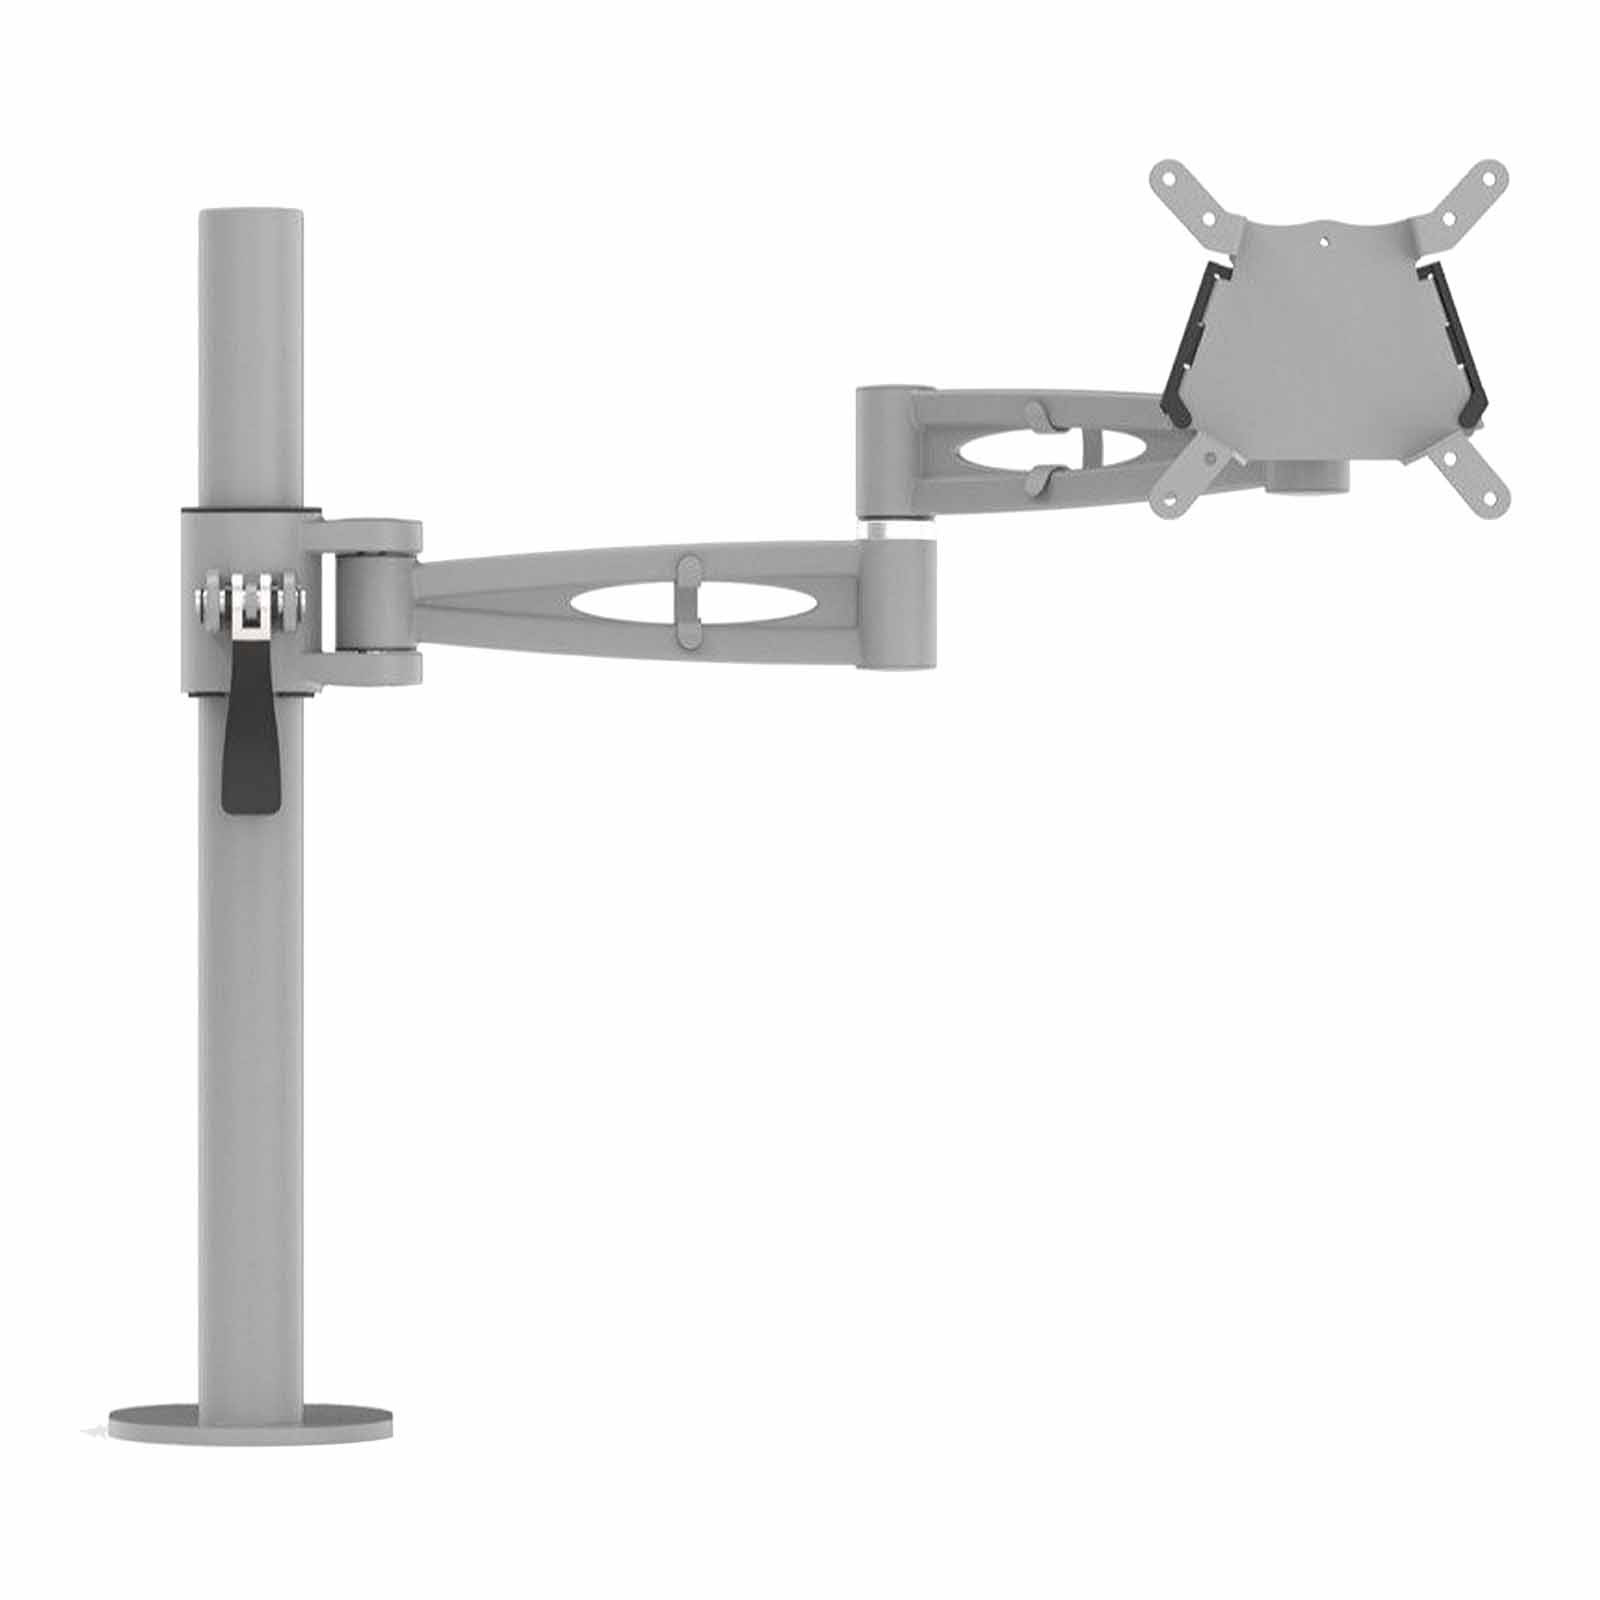 Desk mounted single monitor arm